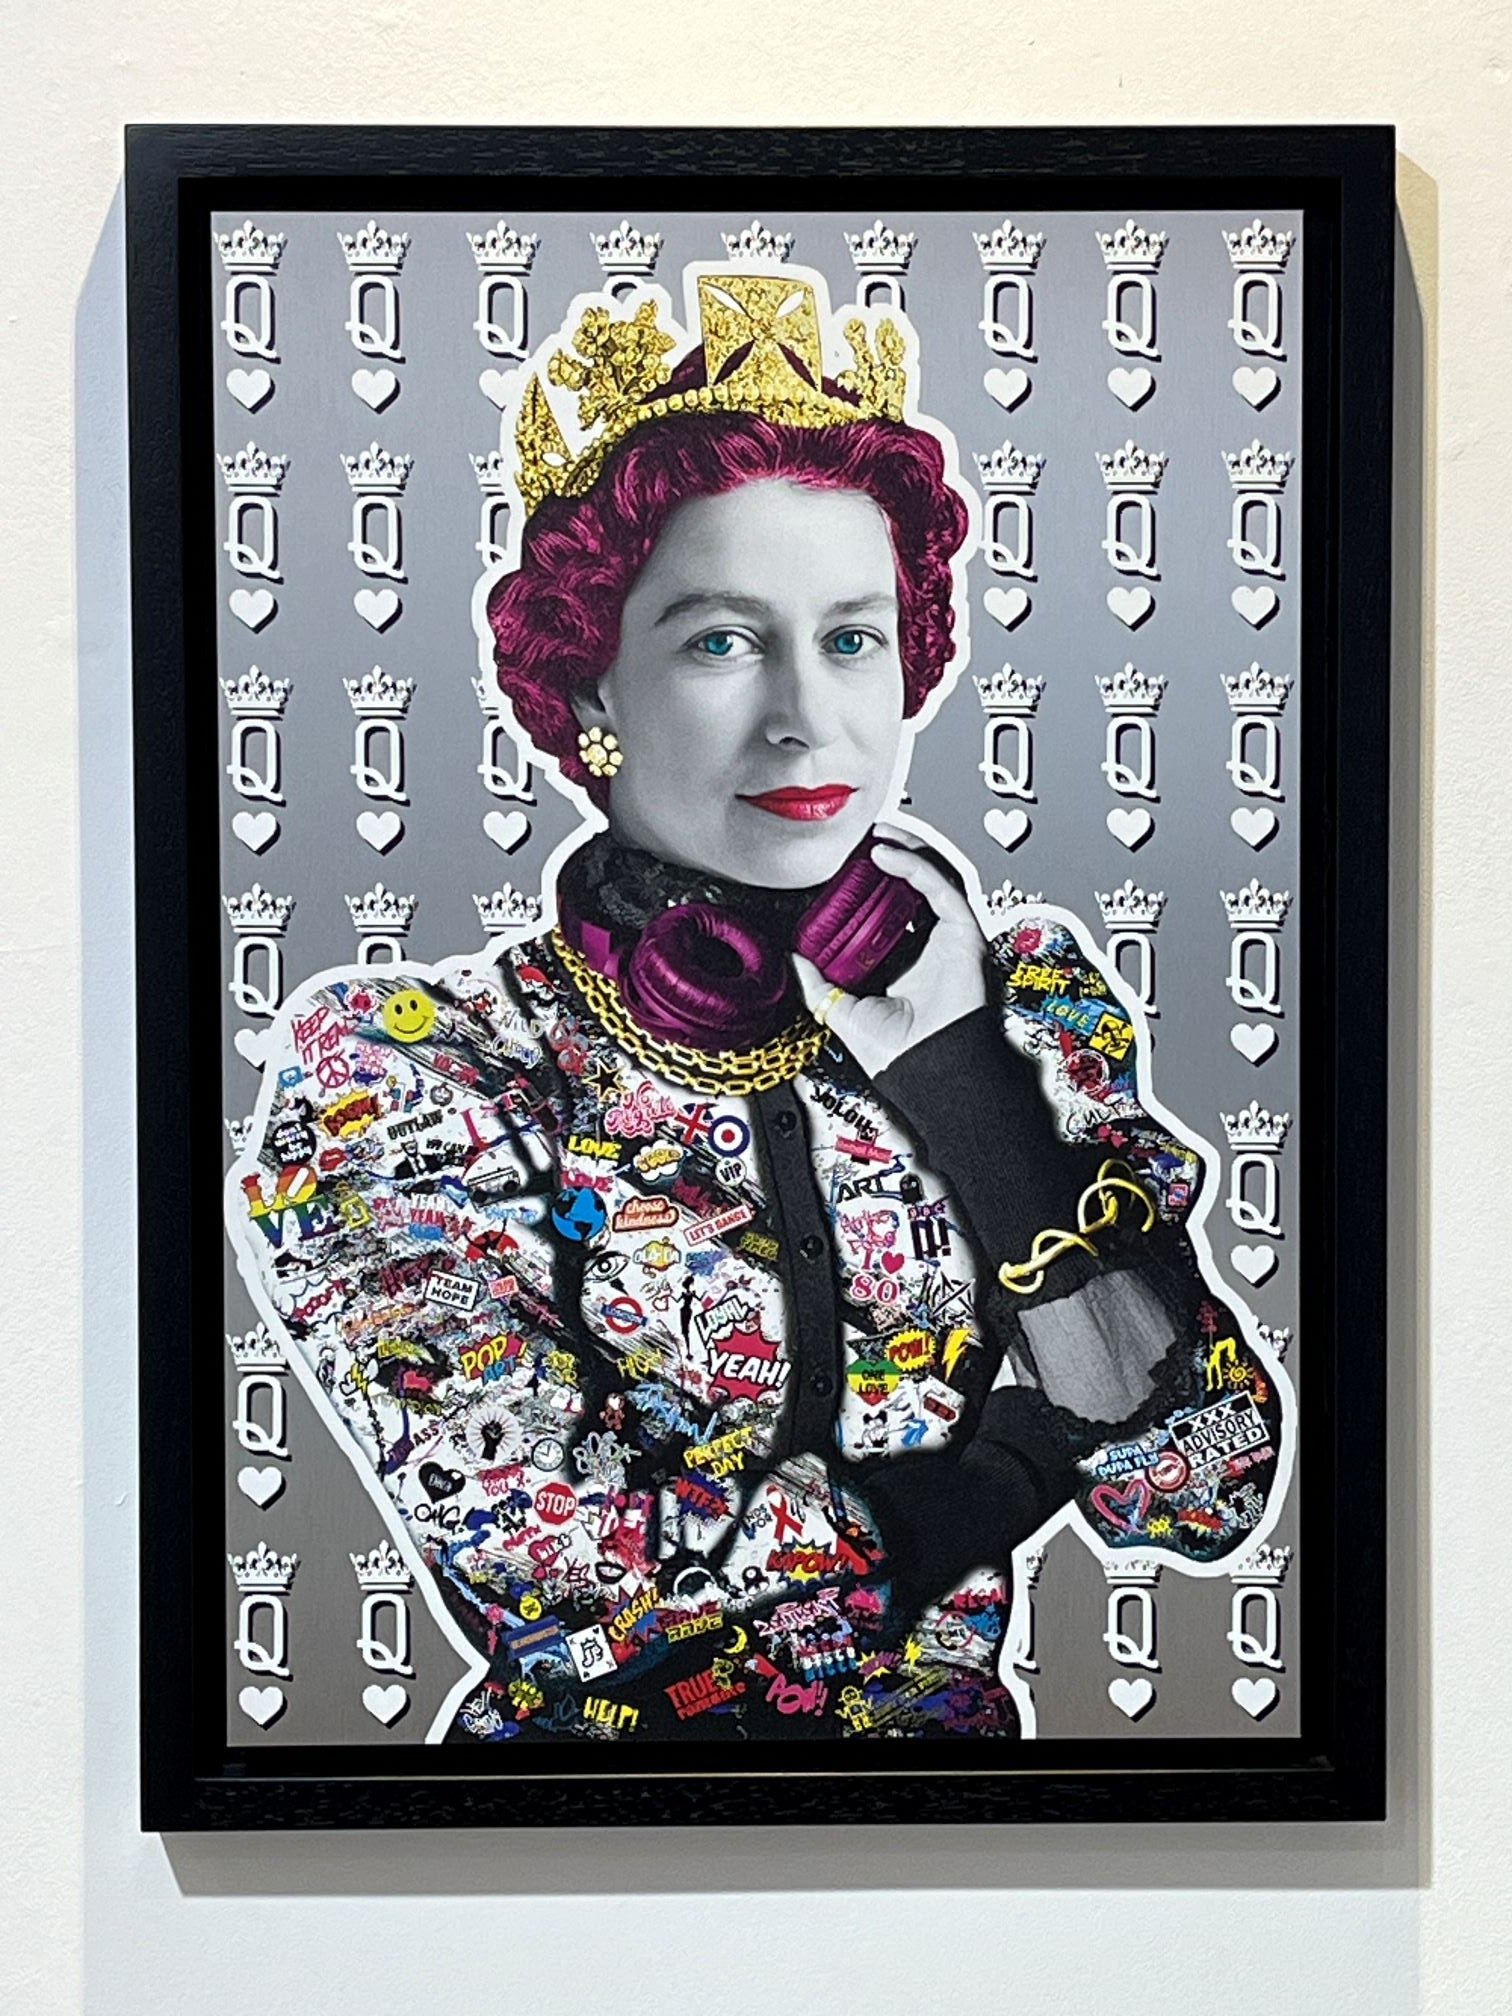 The Postman - The Queen (A2 / A1 Framed Aluminium Edition)